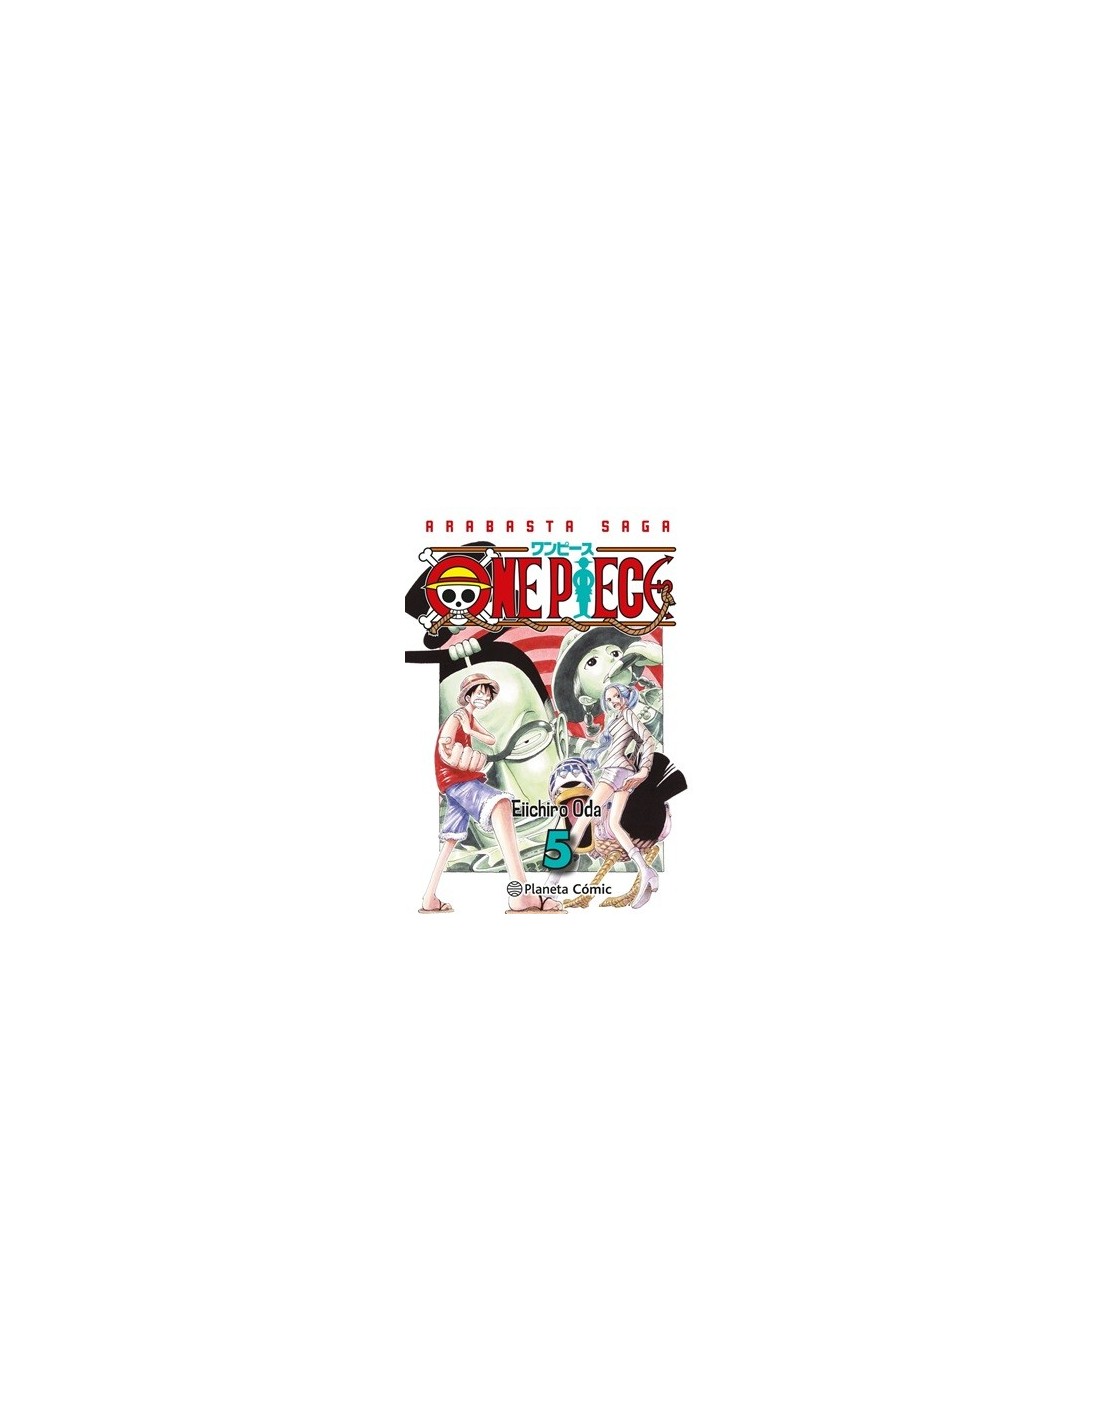 One Piece (3 en 1) 3 Planeta Comics Manga Eiichiro Oda